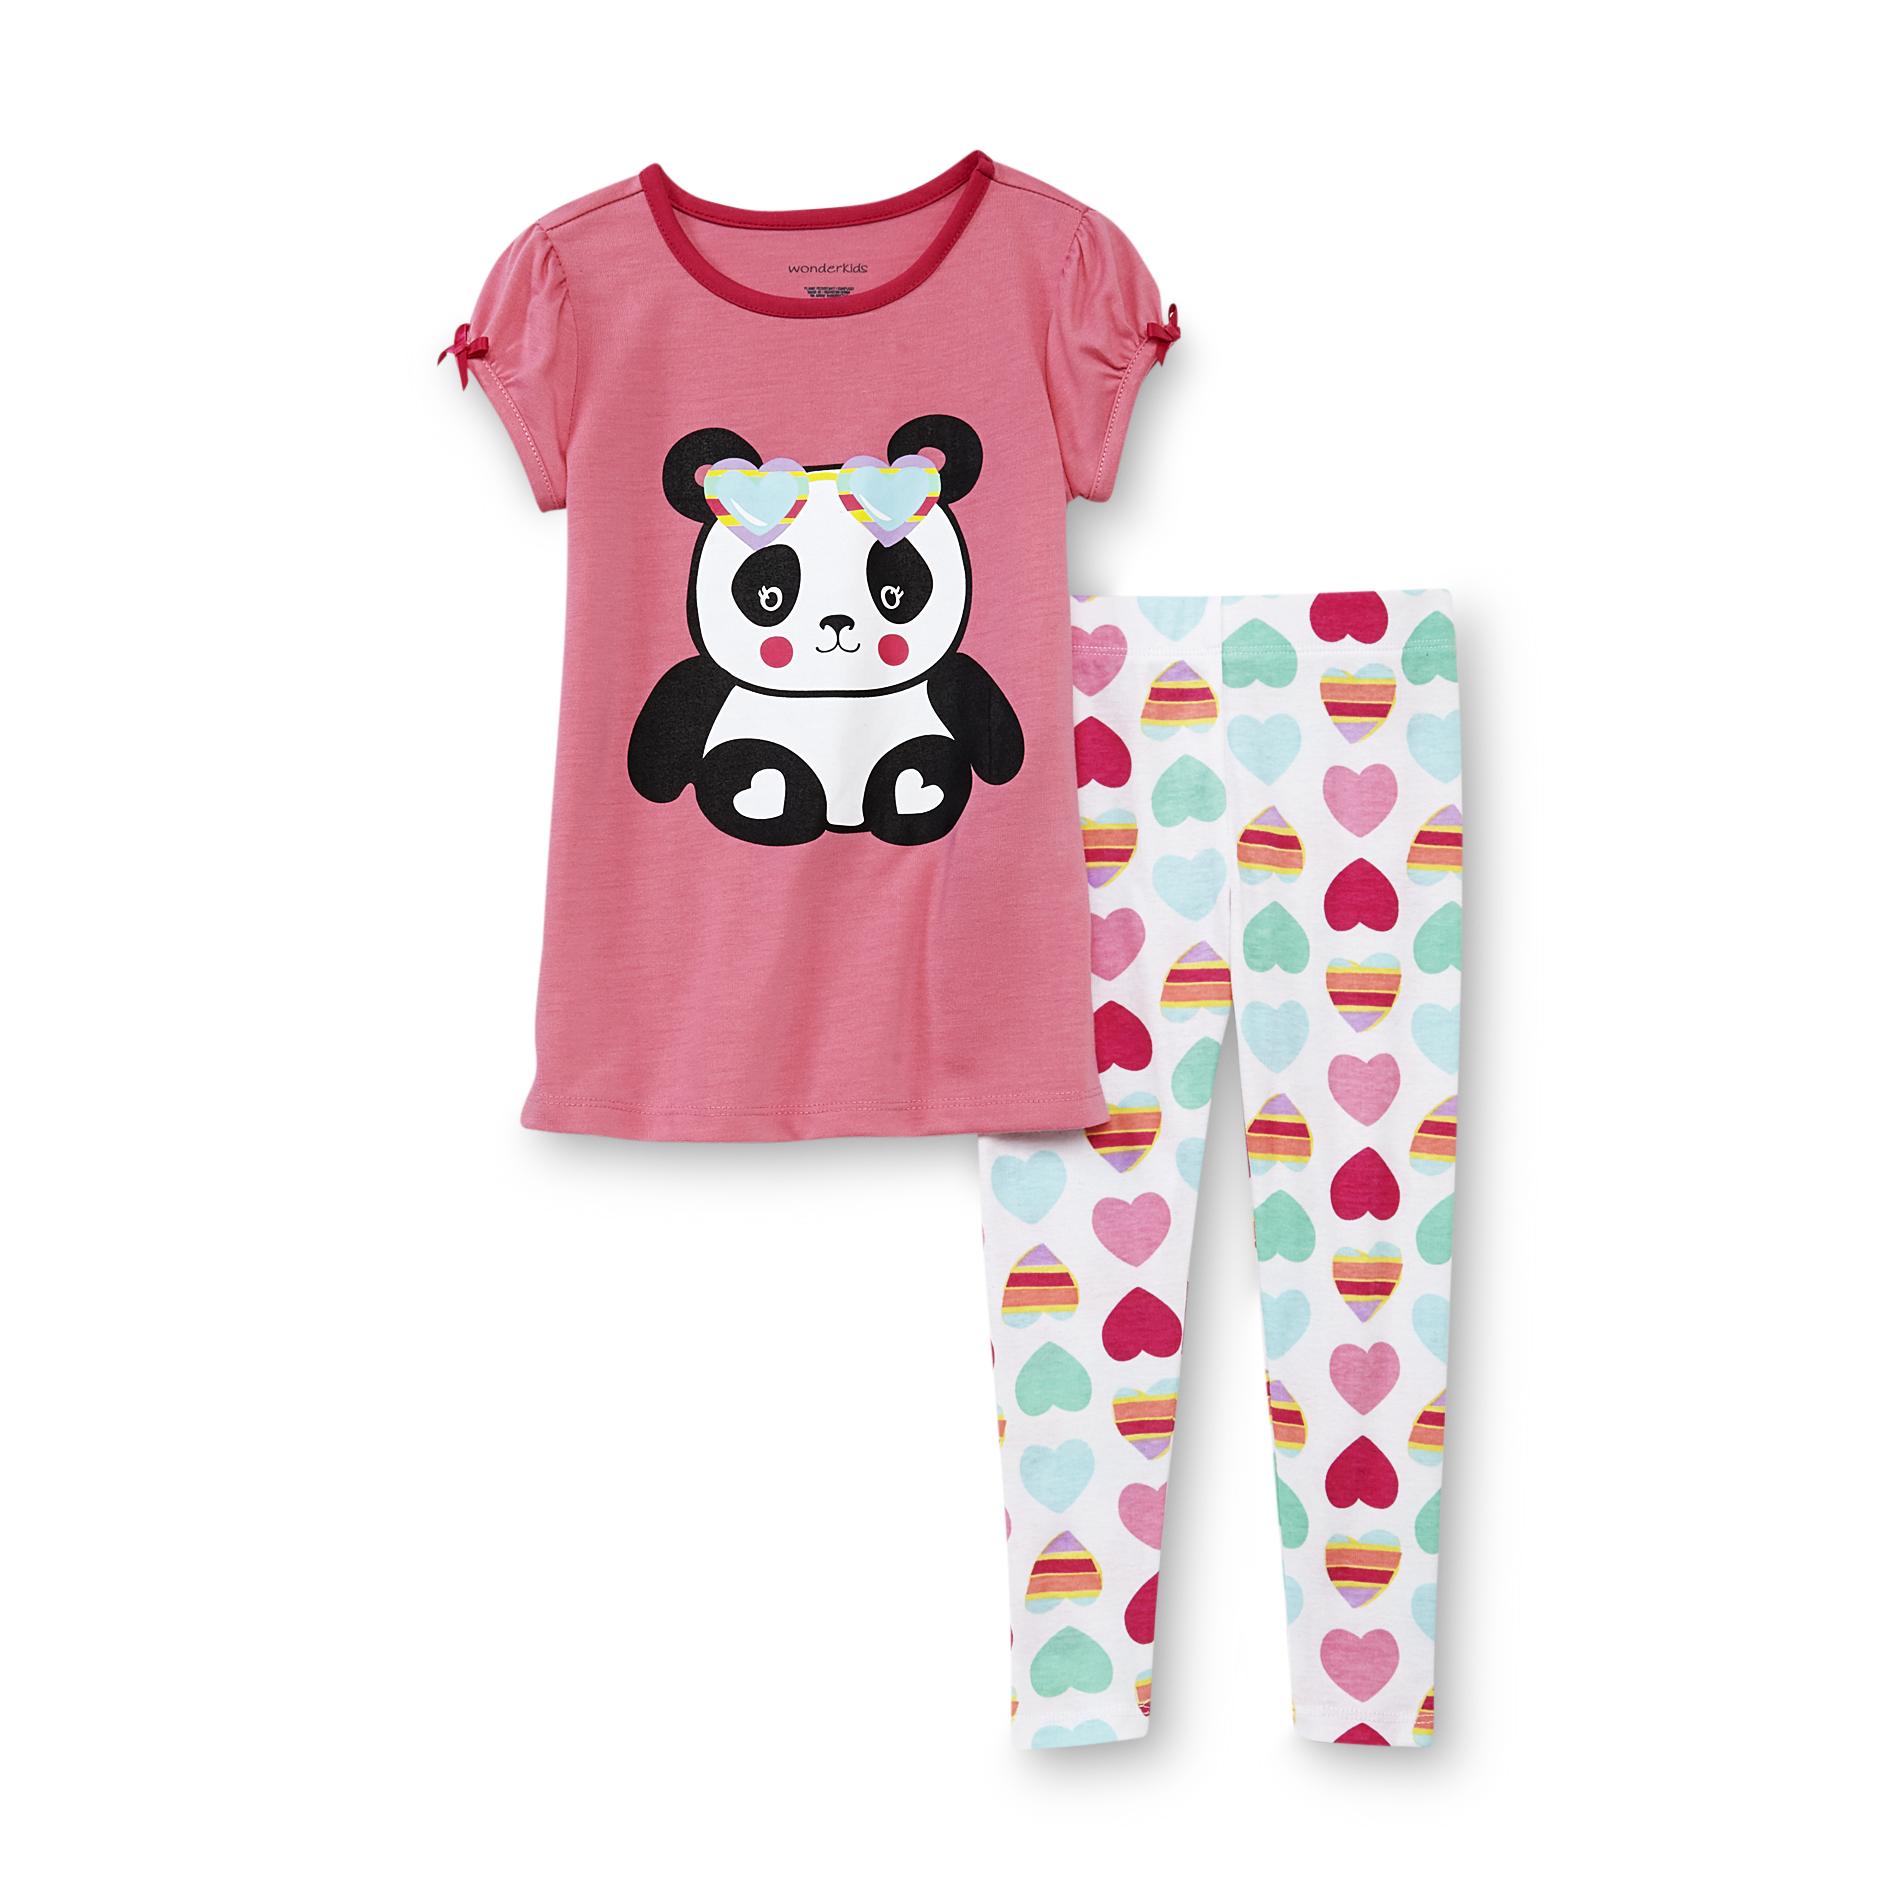 WonderKids Infant & Toddler Girl's Graphic Pajama Top & Pants - Panda